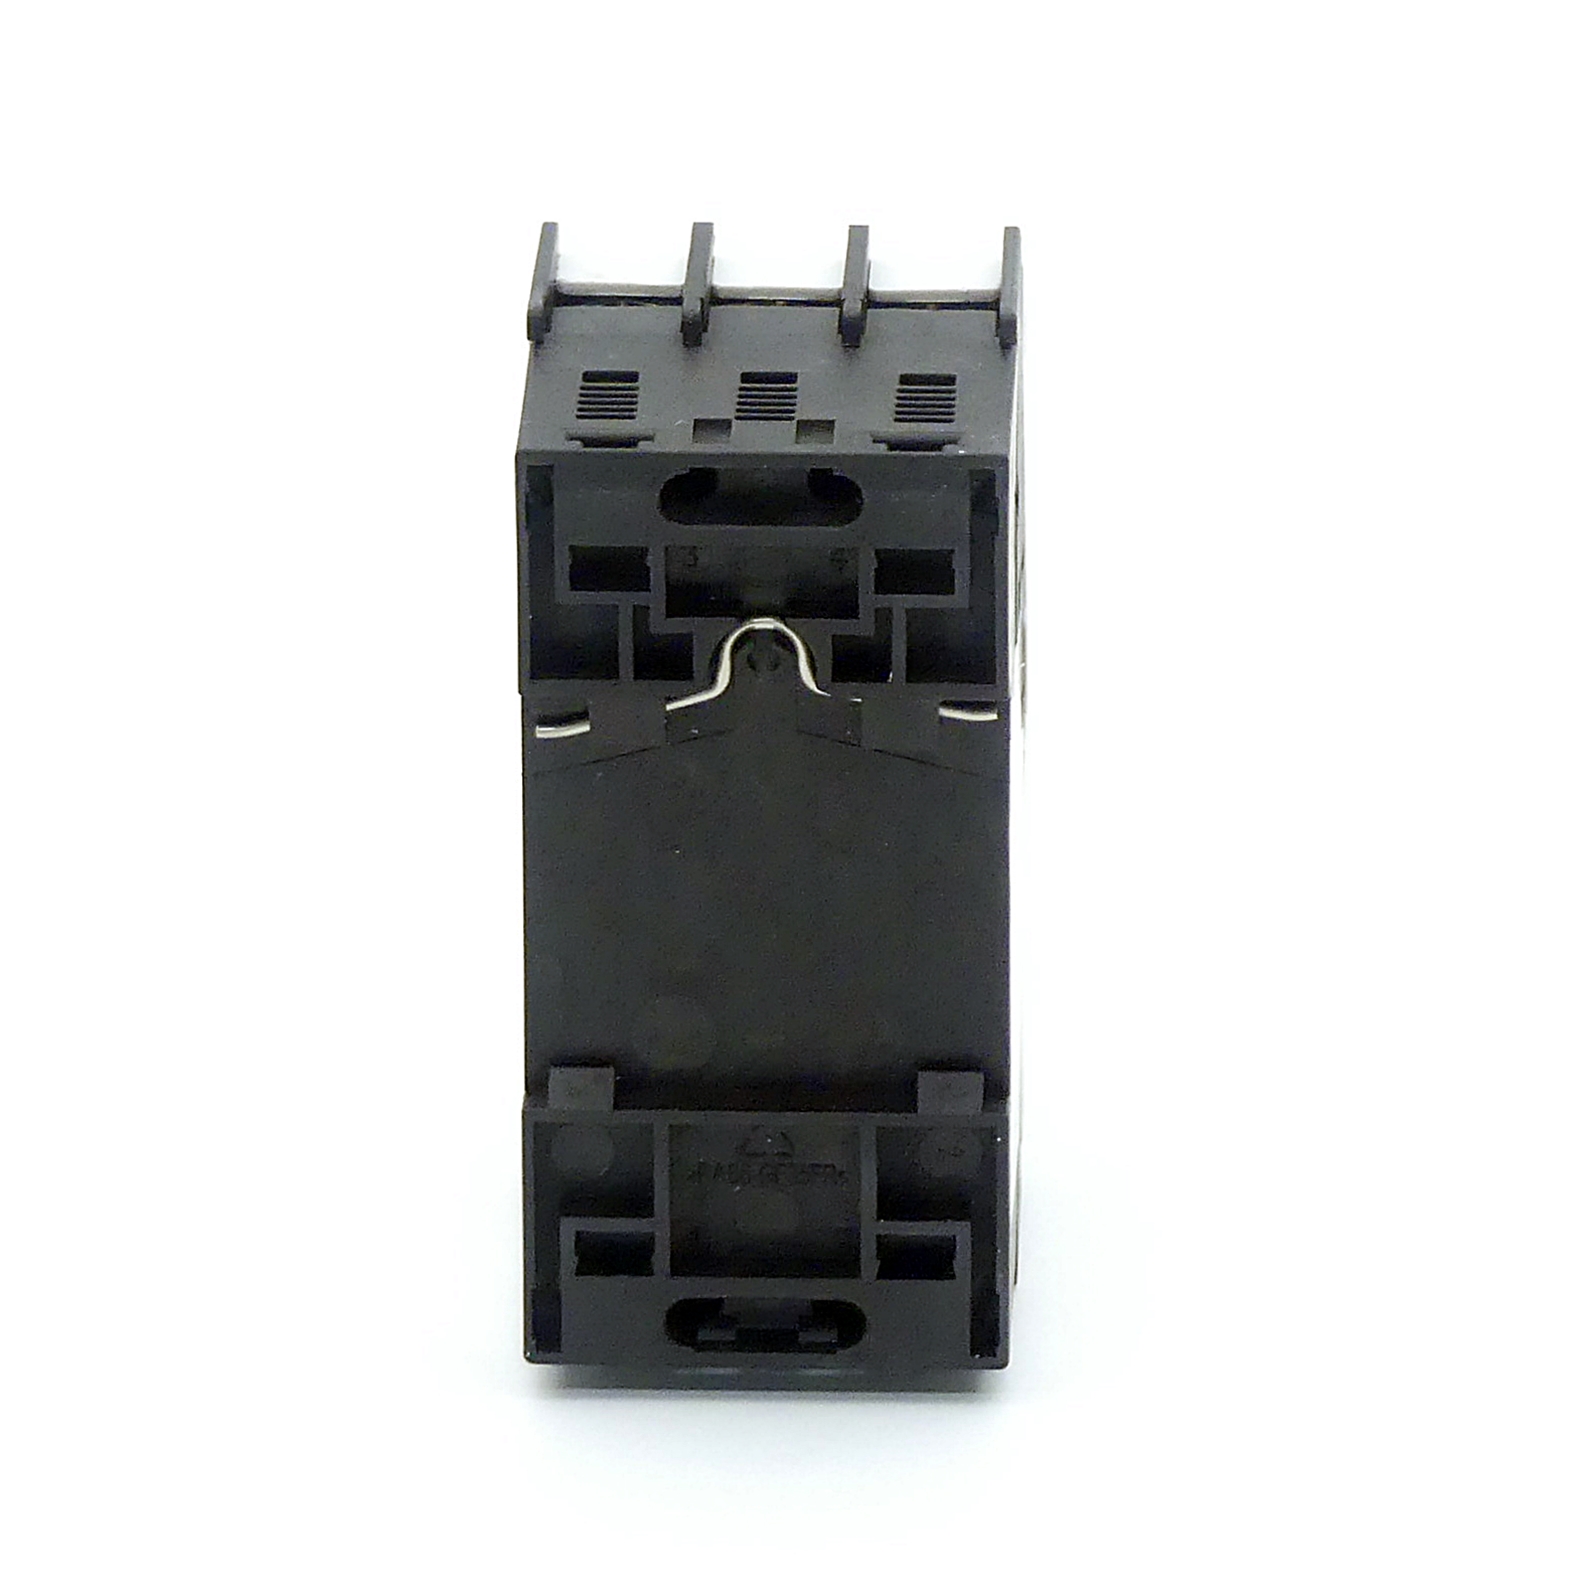 Circuit breaker 3RV1021-0HA15 